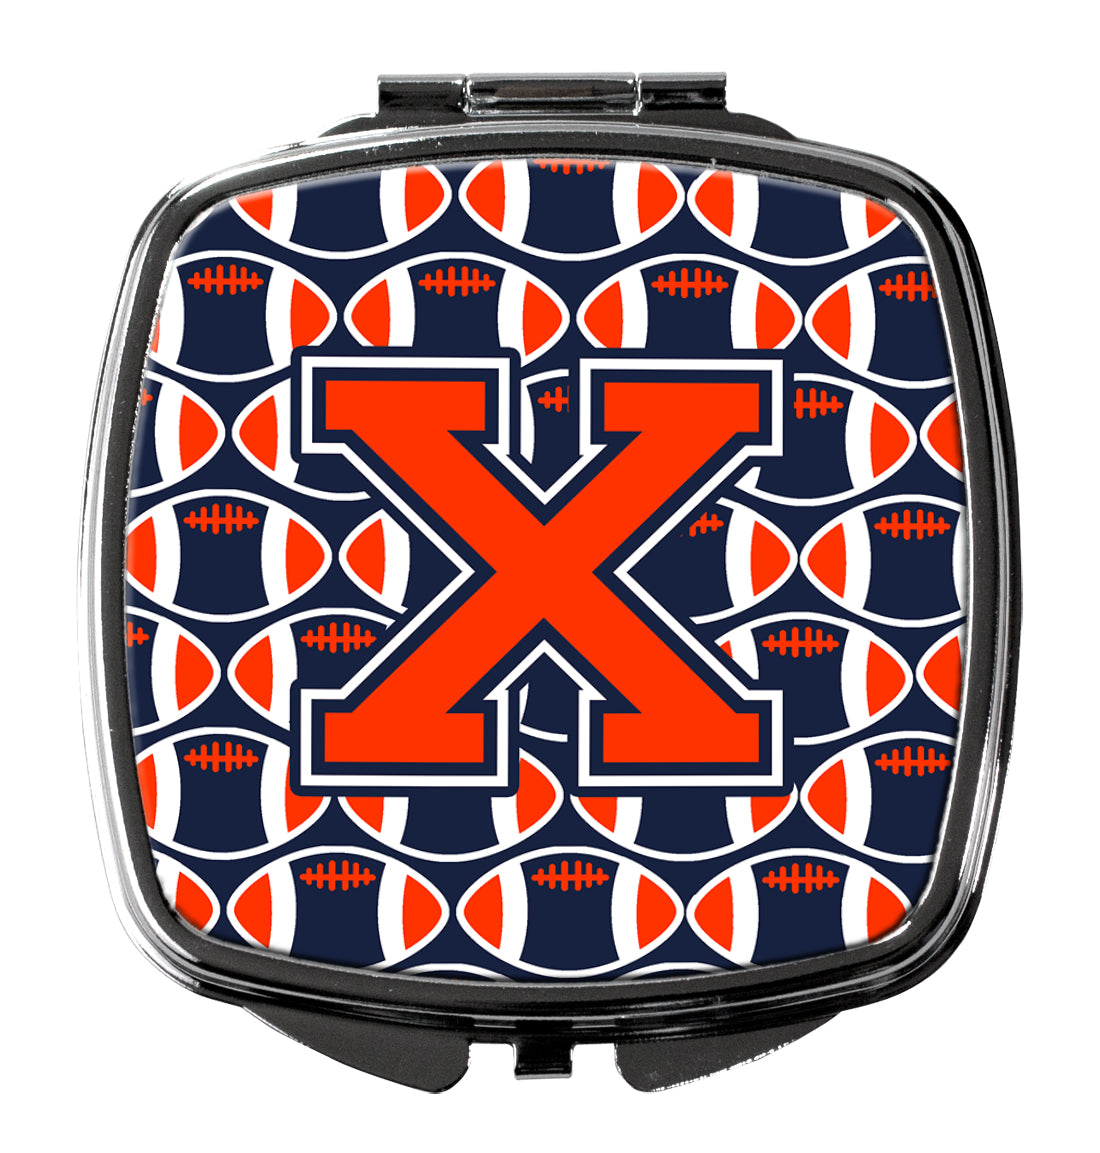 Lettre X Football Orange, Bleu et Blanc Miroir Compact CJ1066-XSCM